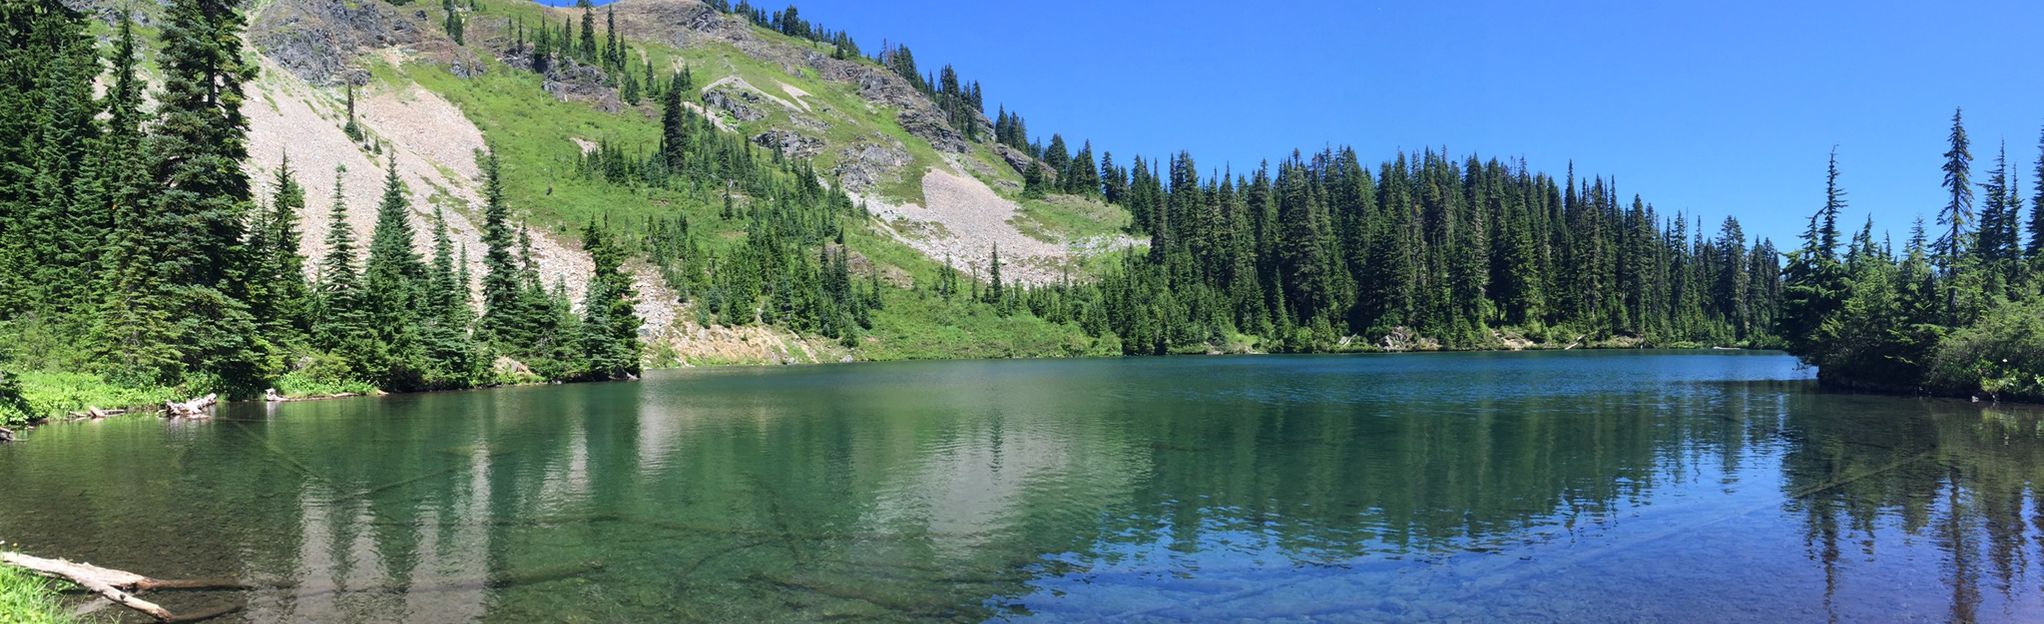 Margaret Lake Trail: 837 Reviews, Map - Washington | AllTrails